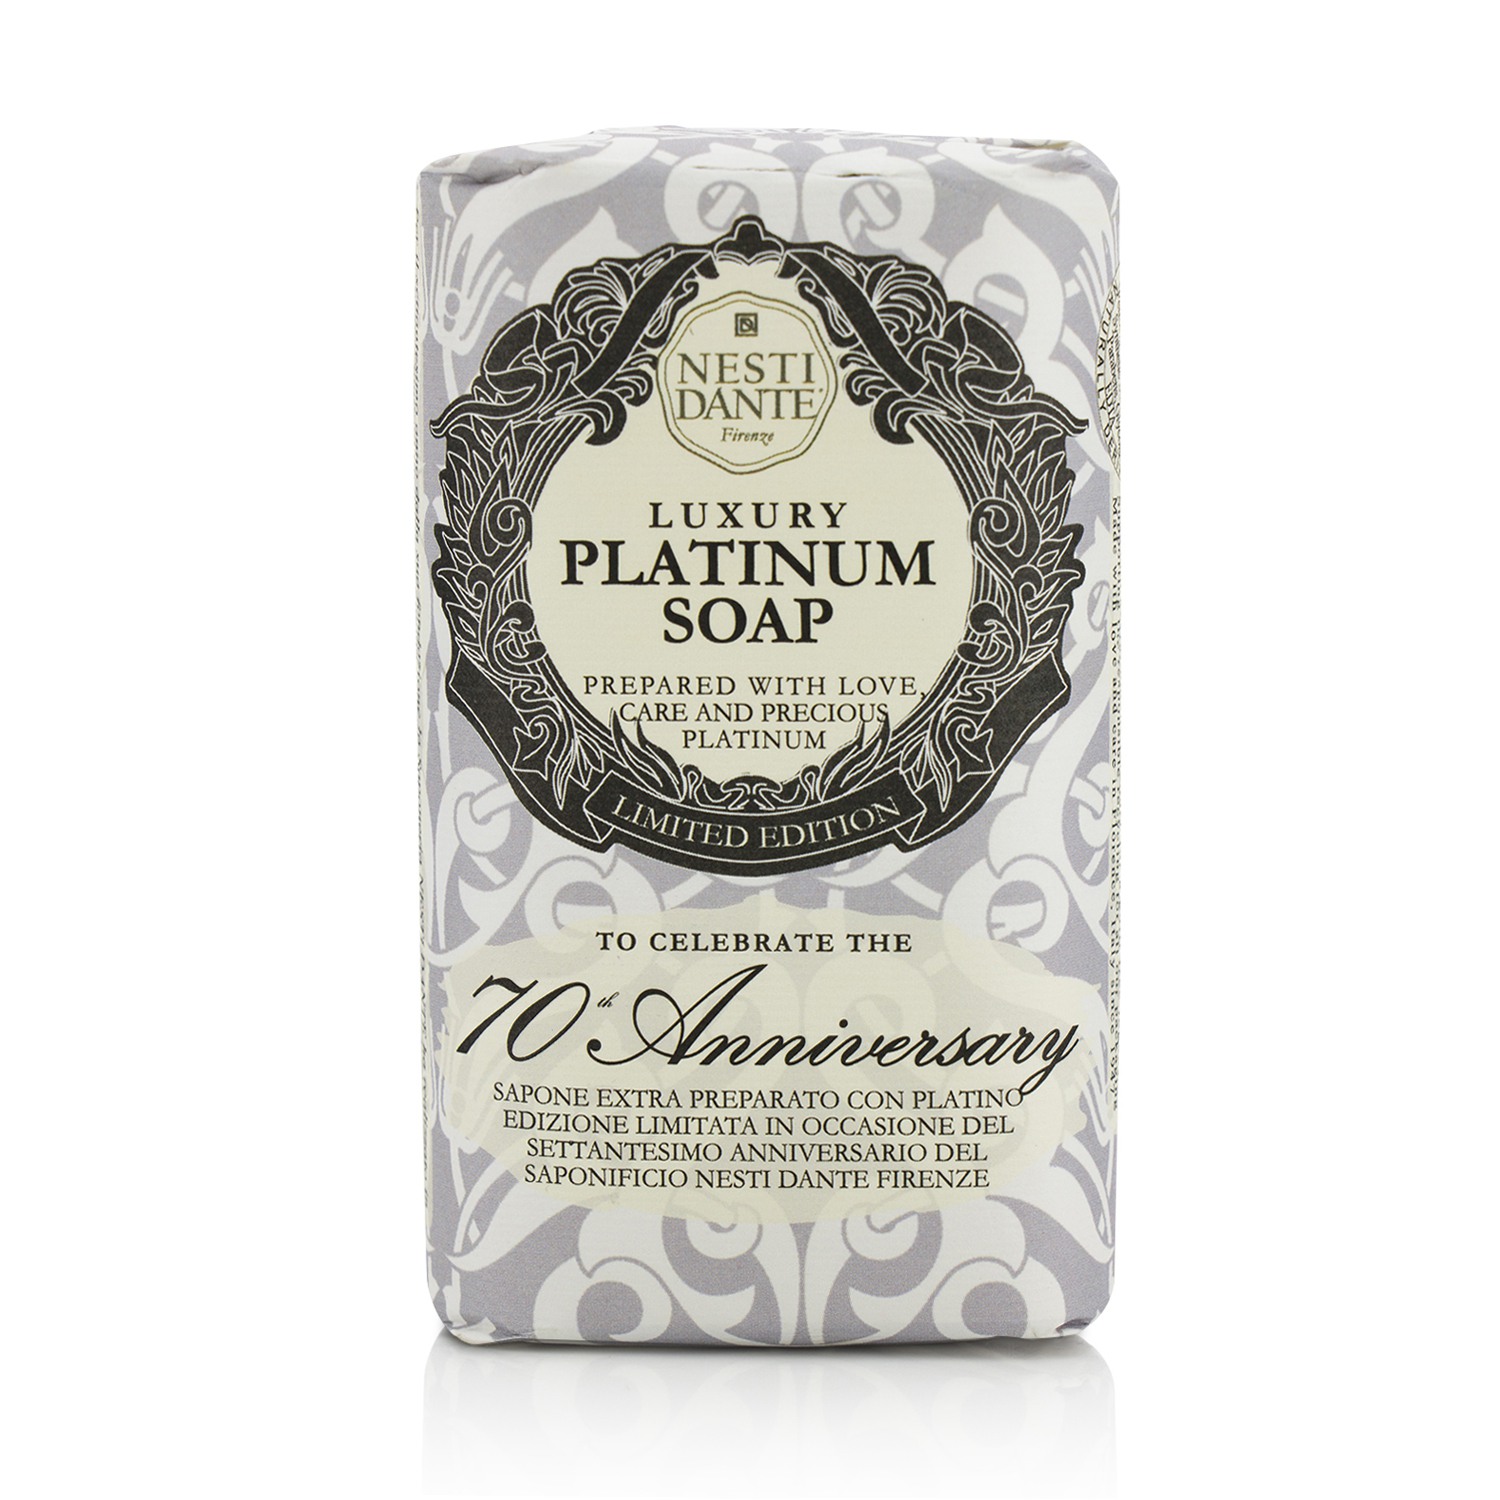 7070 Anniversary Luxury Platinum Soap With Precious Platinum (Limited Edition) Nesti Dante Image